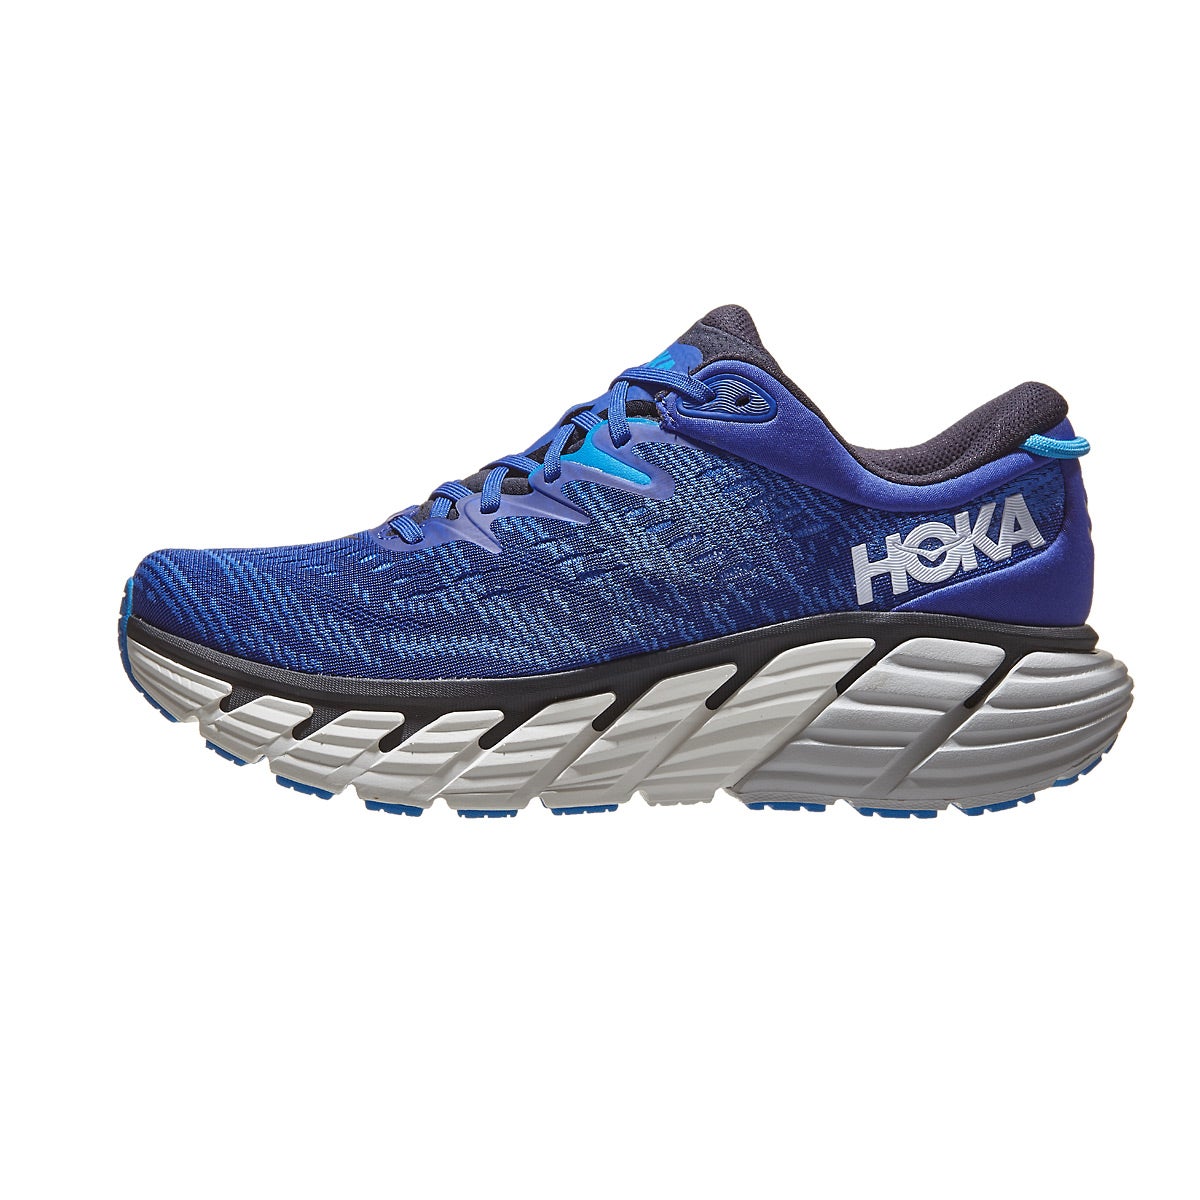 HOKA Gaviota 4 Men's Shoes Bluing/Blue Graphite 360° View - Tennis ...